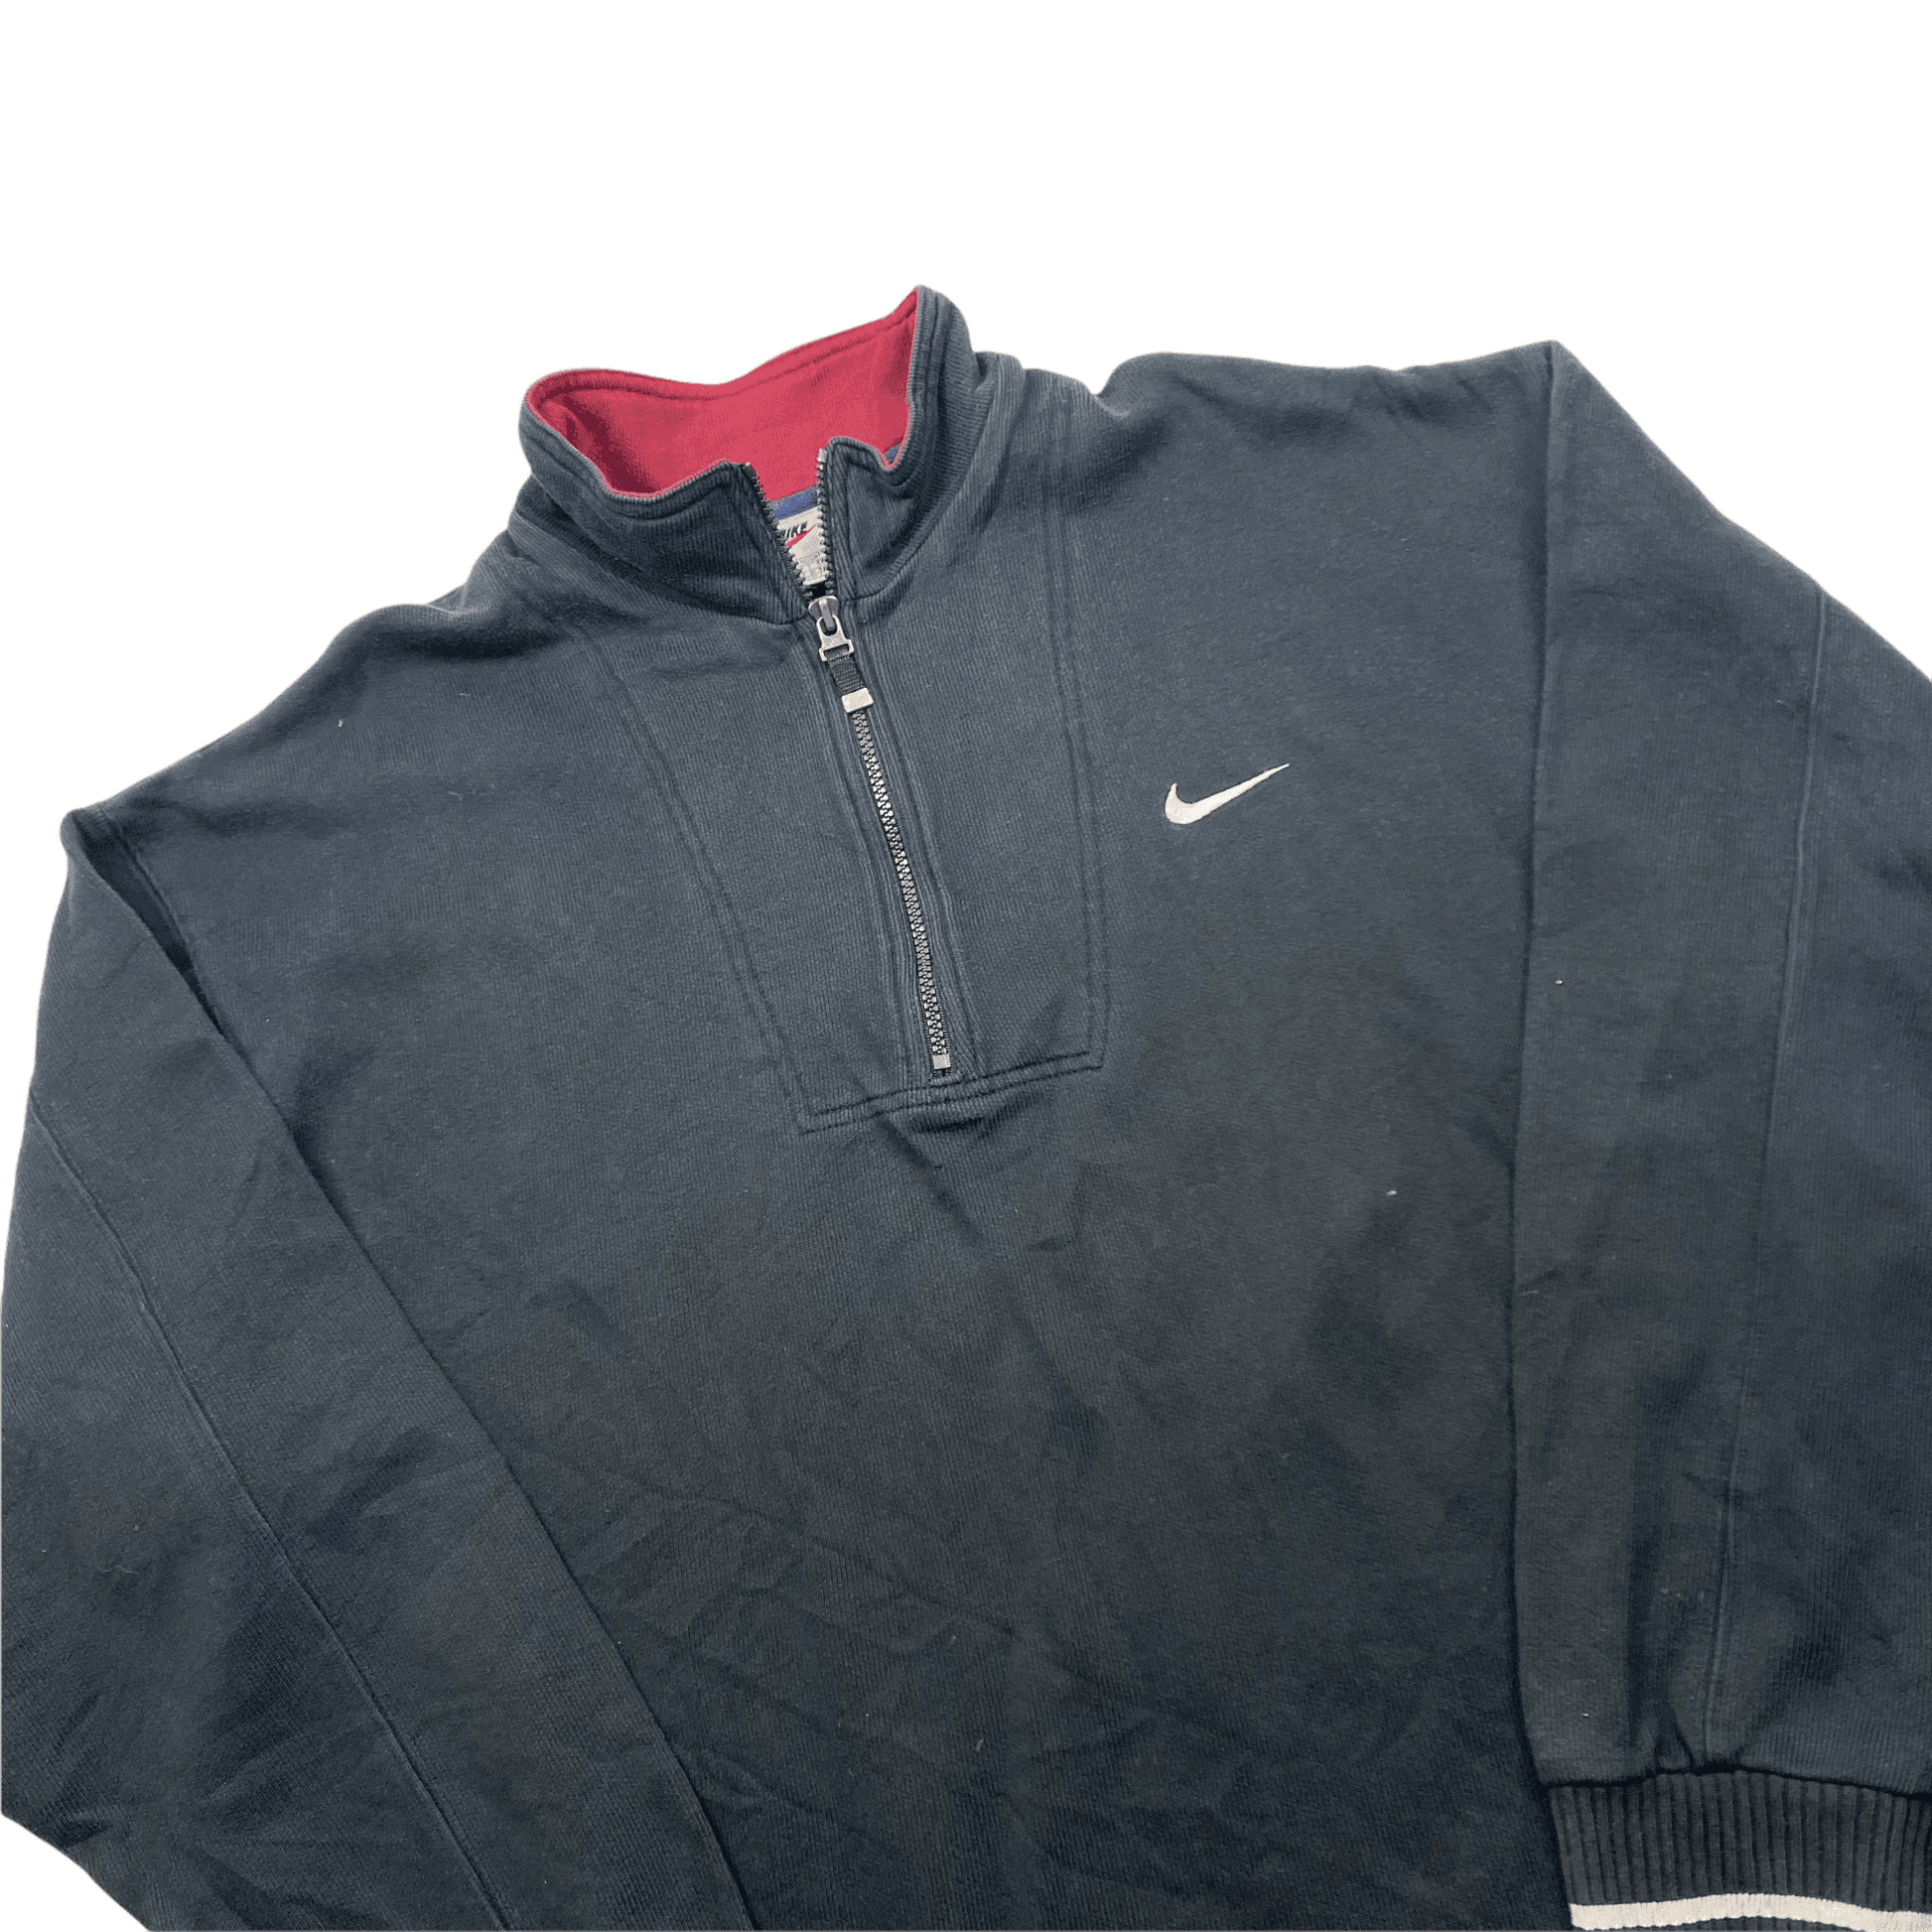 Vintage 90s Black Nike Quarter Zip Sweatshirt - Extra Large - The Streetwear Studio